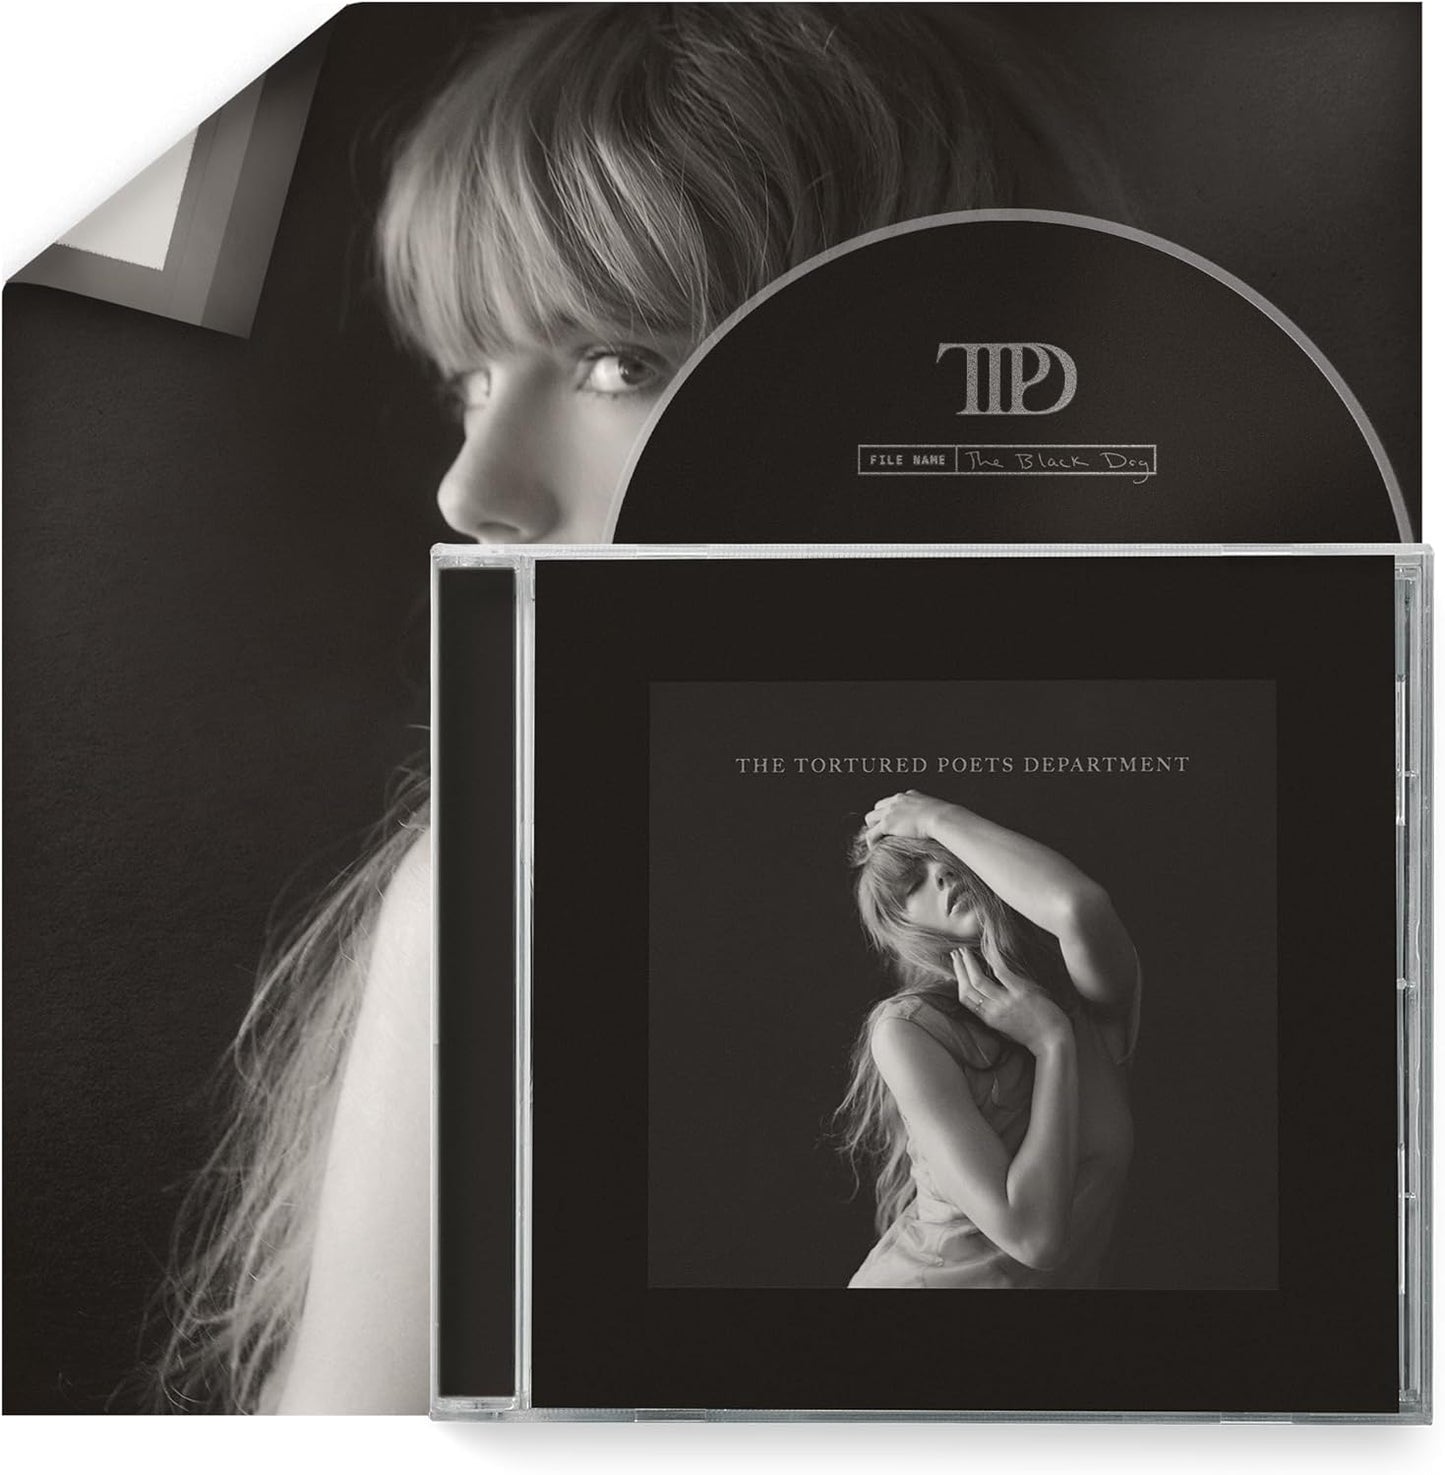 Taylor Swift - The Tortured Poets Department + Bonus Track “The Black Dog” - CD+Poster